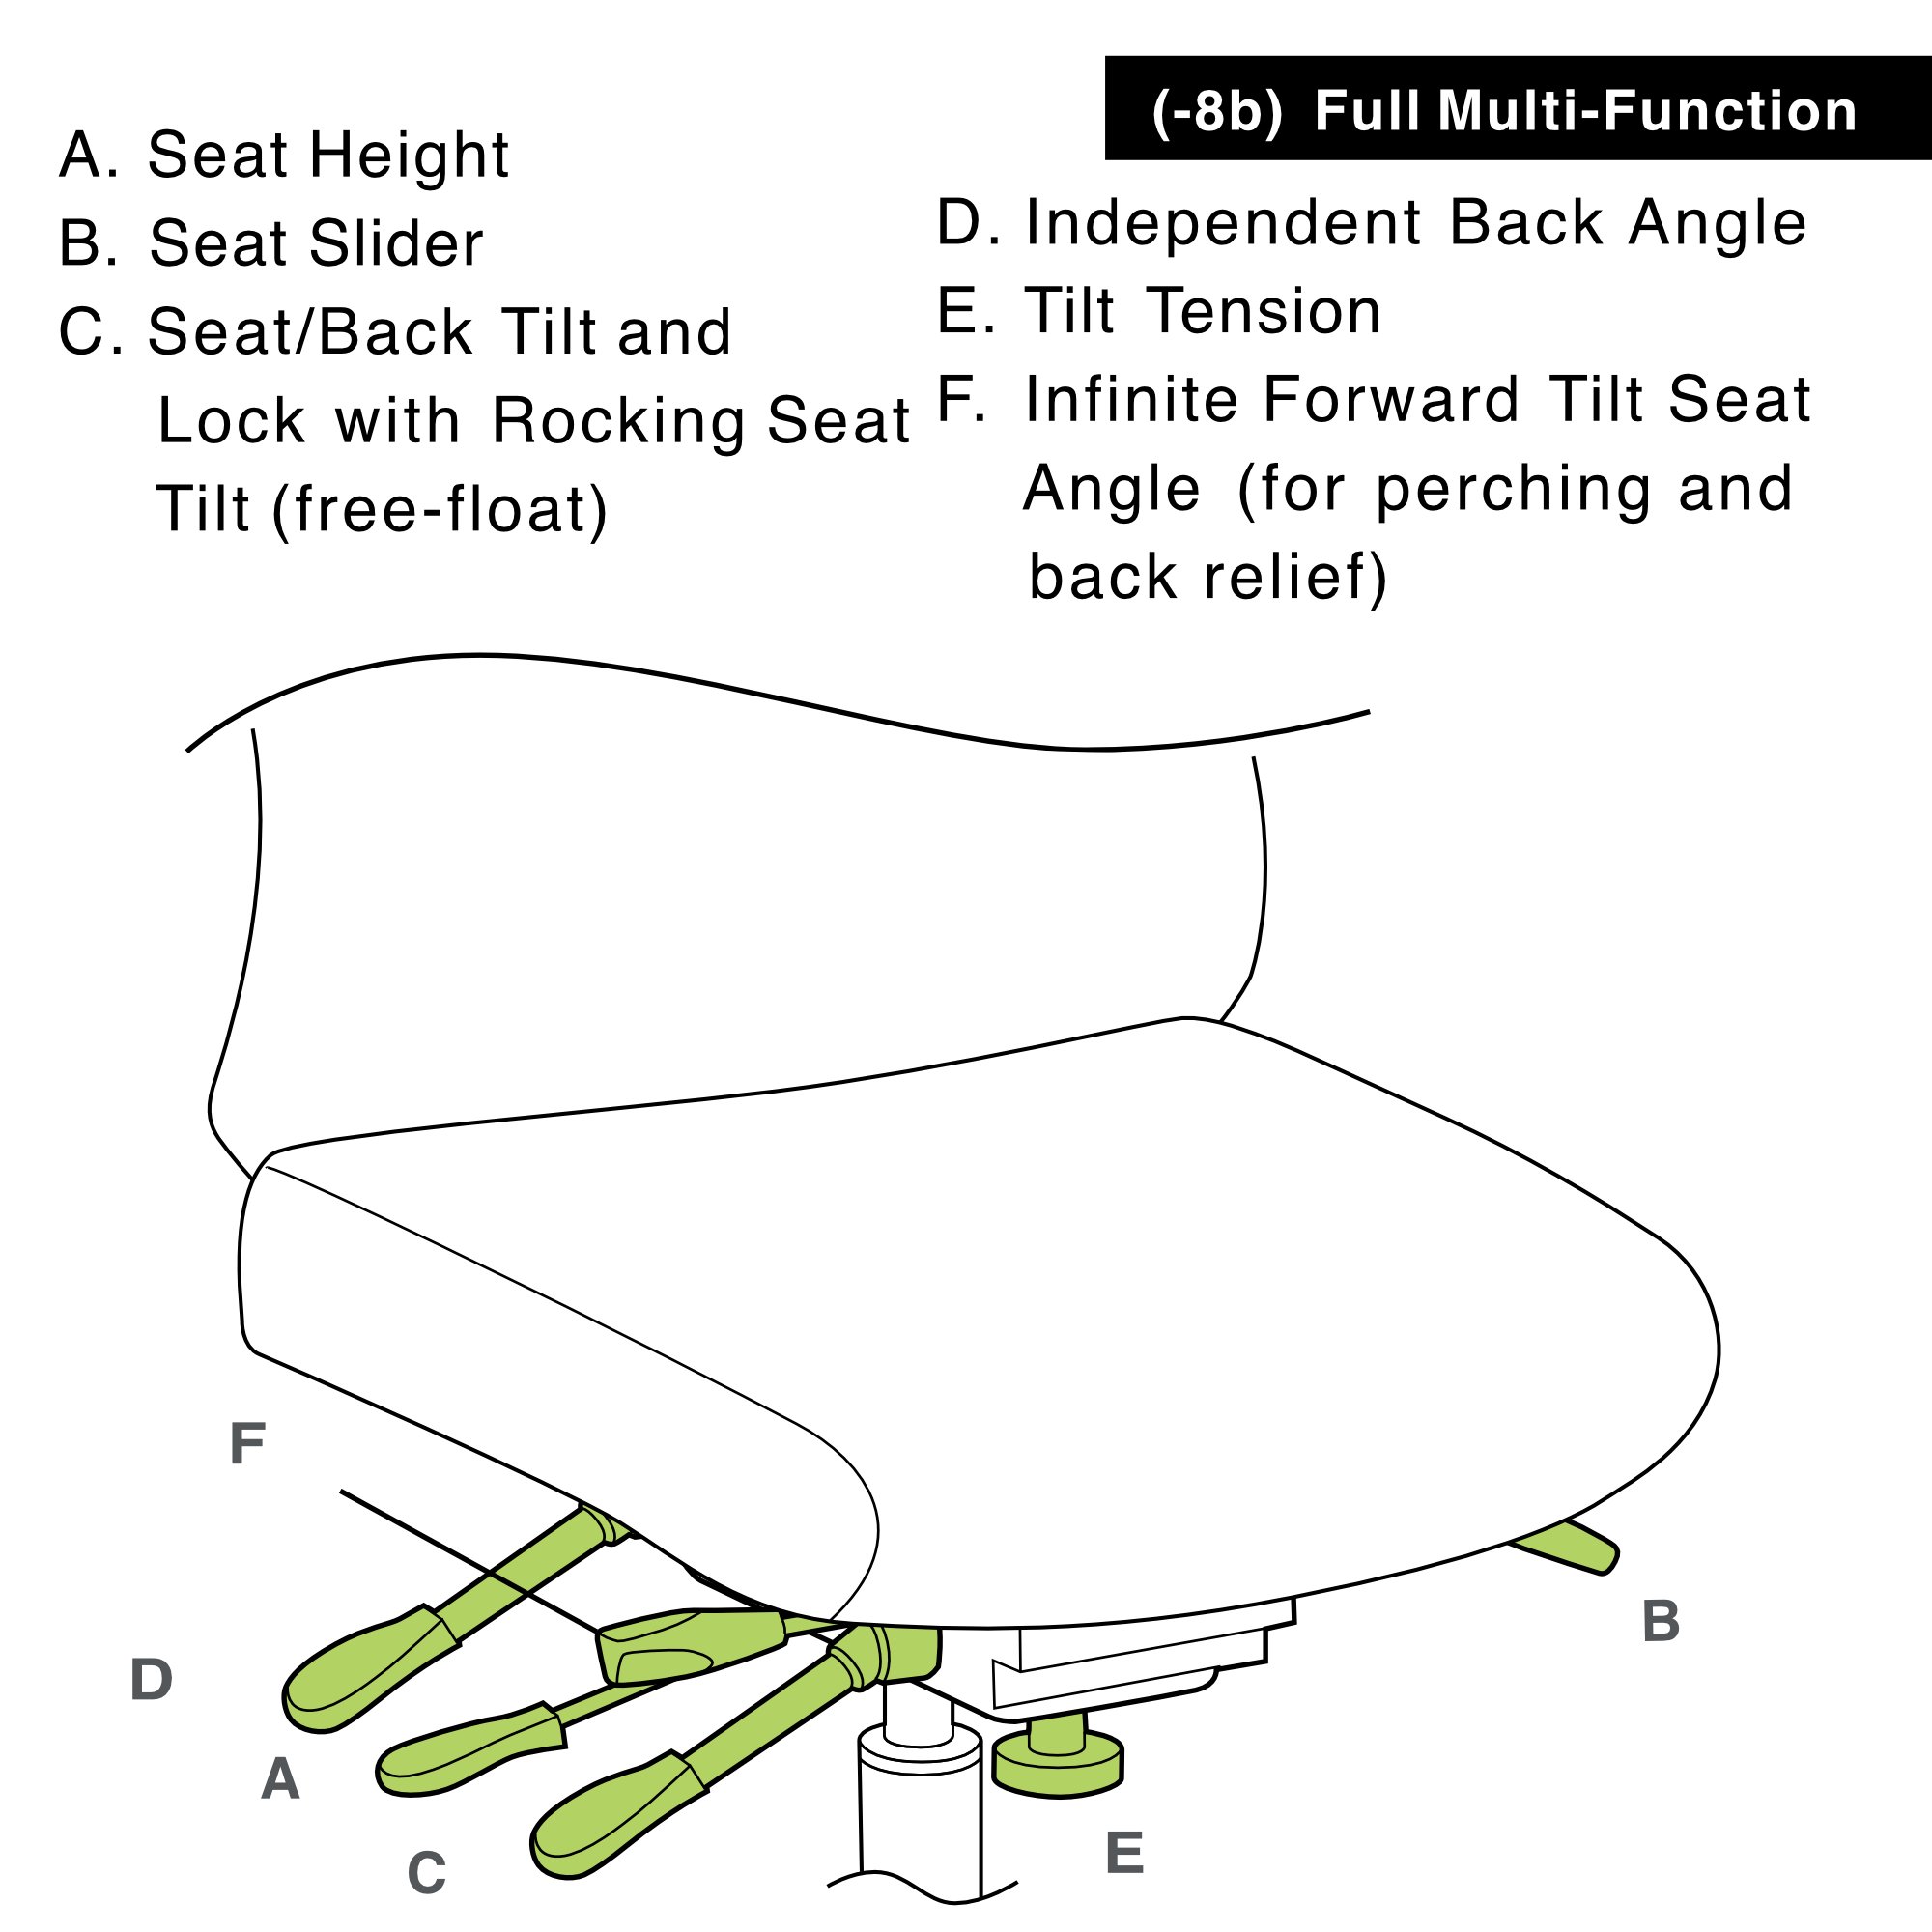 Office Master AF488 (OM Seating) Multi-Function Affirm Chair